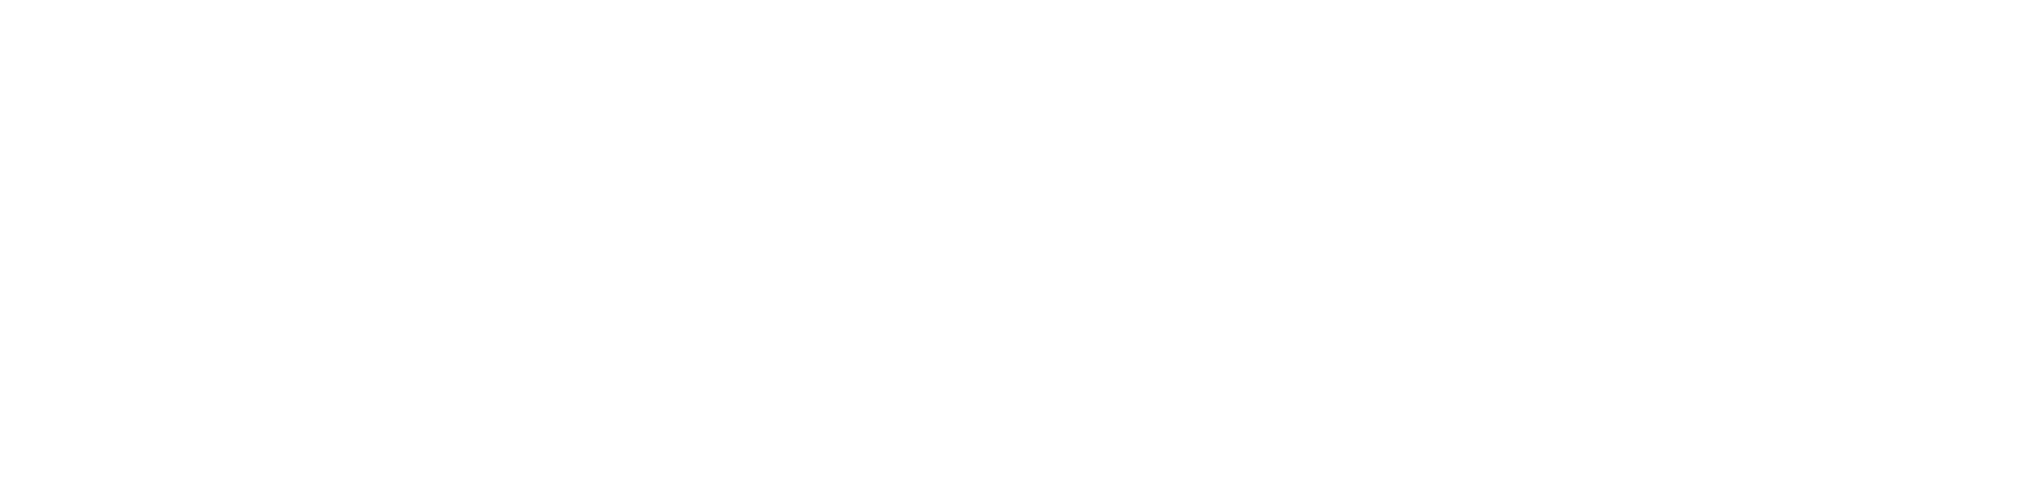 Strategy Field Guide